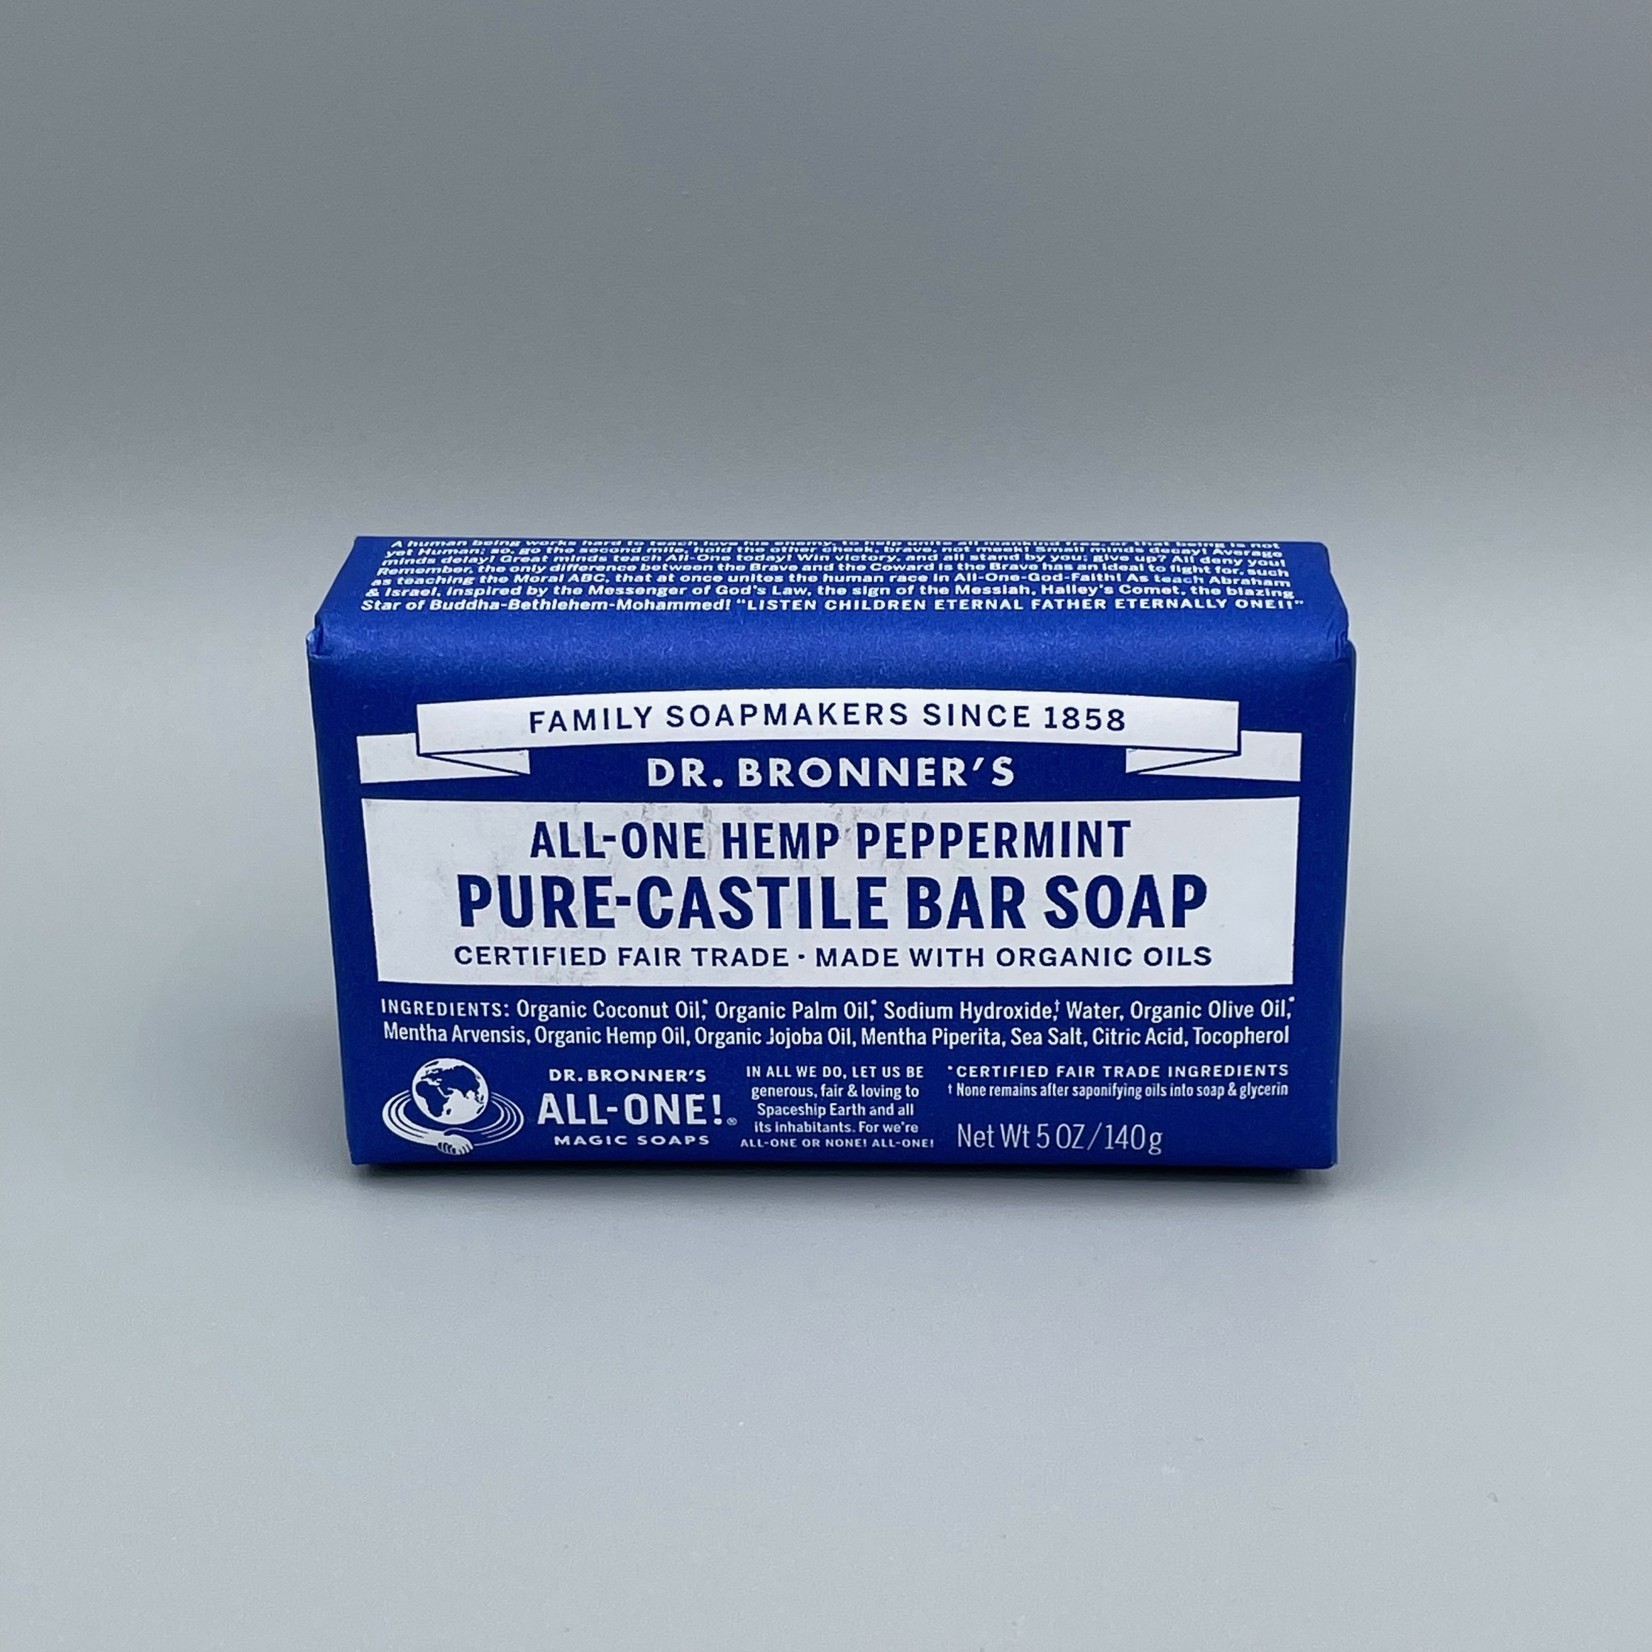 Dr. Bronner's Pure-Castile Bar Soap: